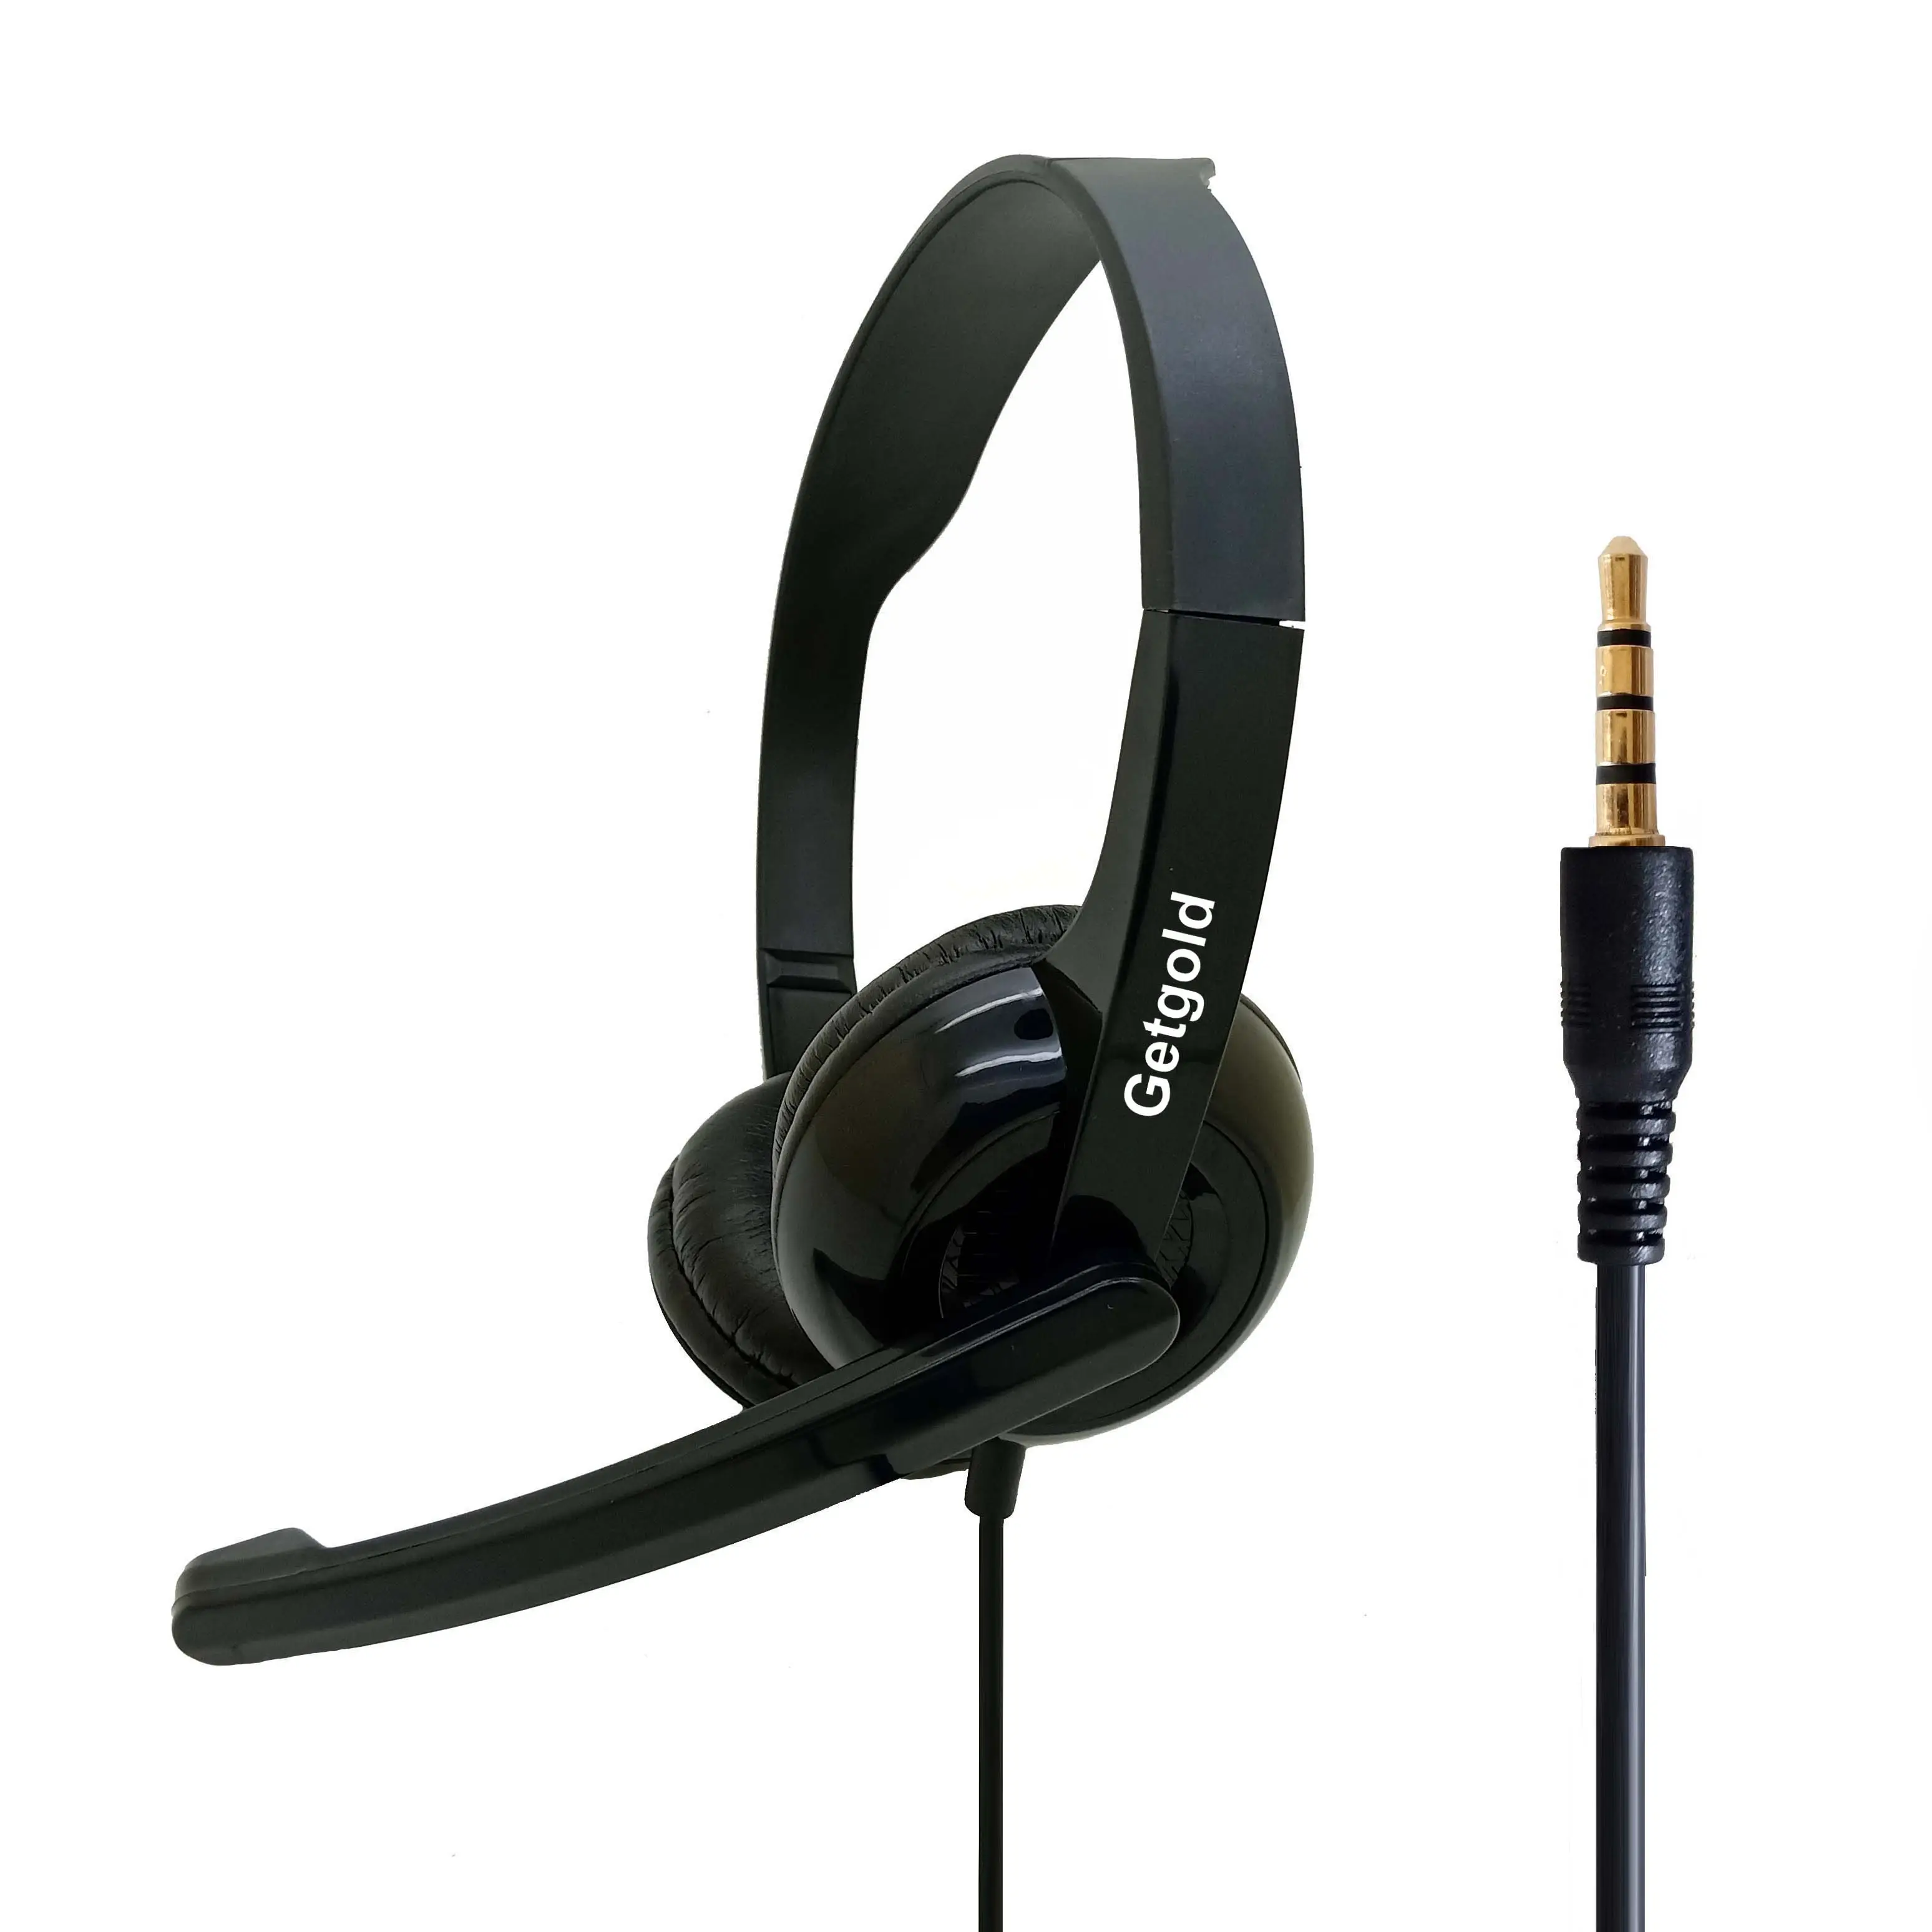 Getgold headphone kelas Premium, Set earphone kelas atas telinga Studio berkabel dengan mikrofon